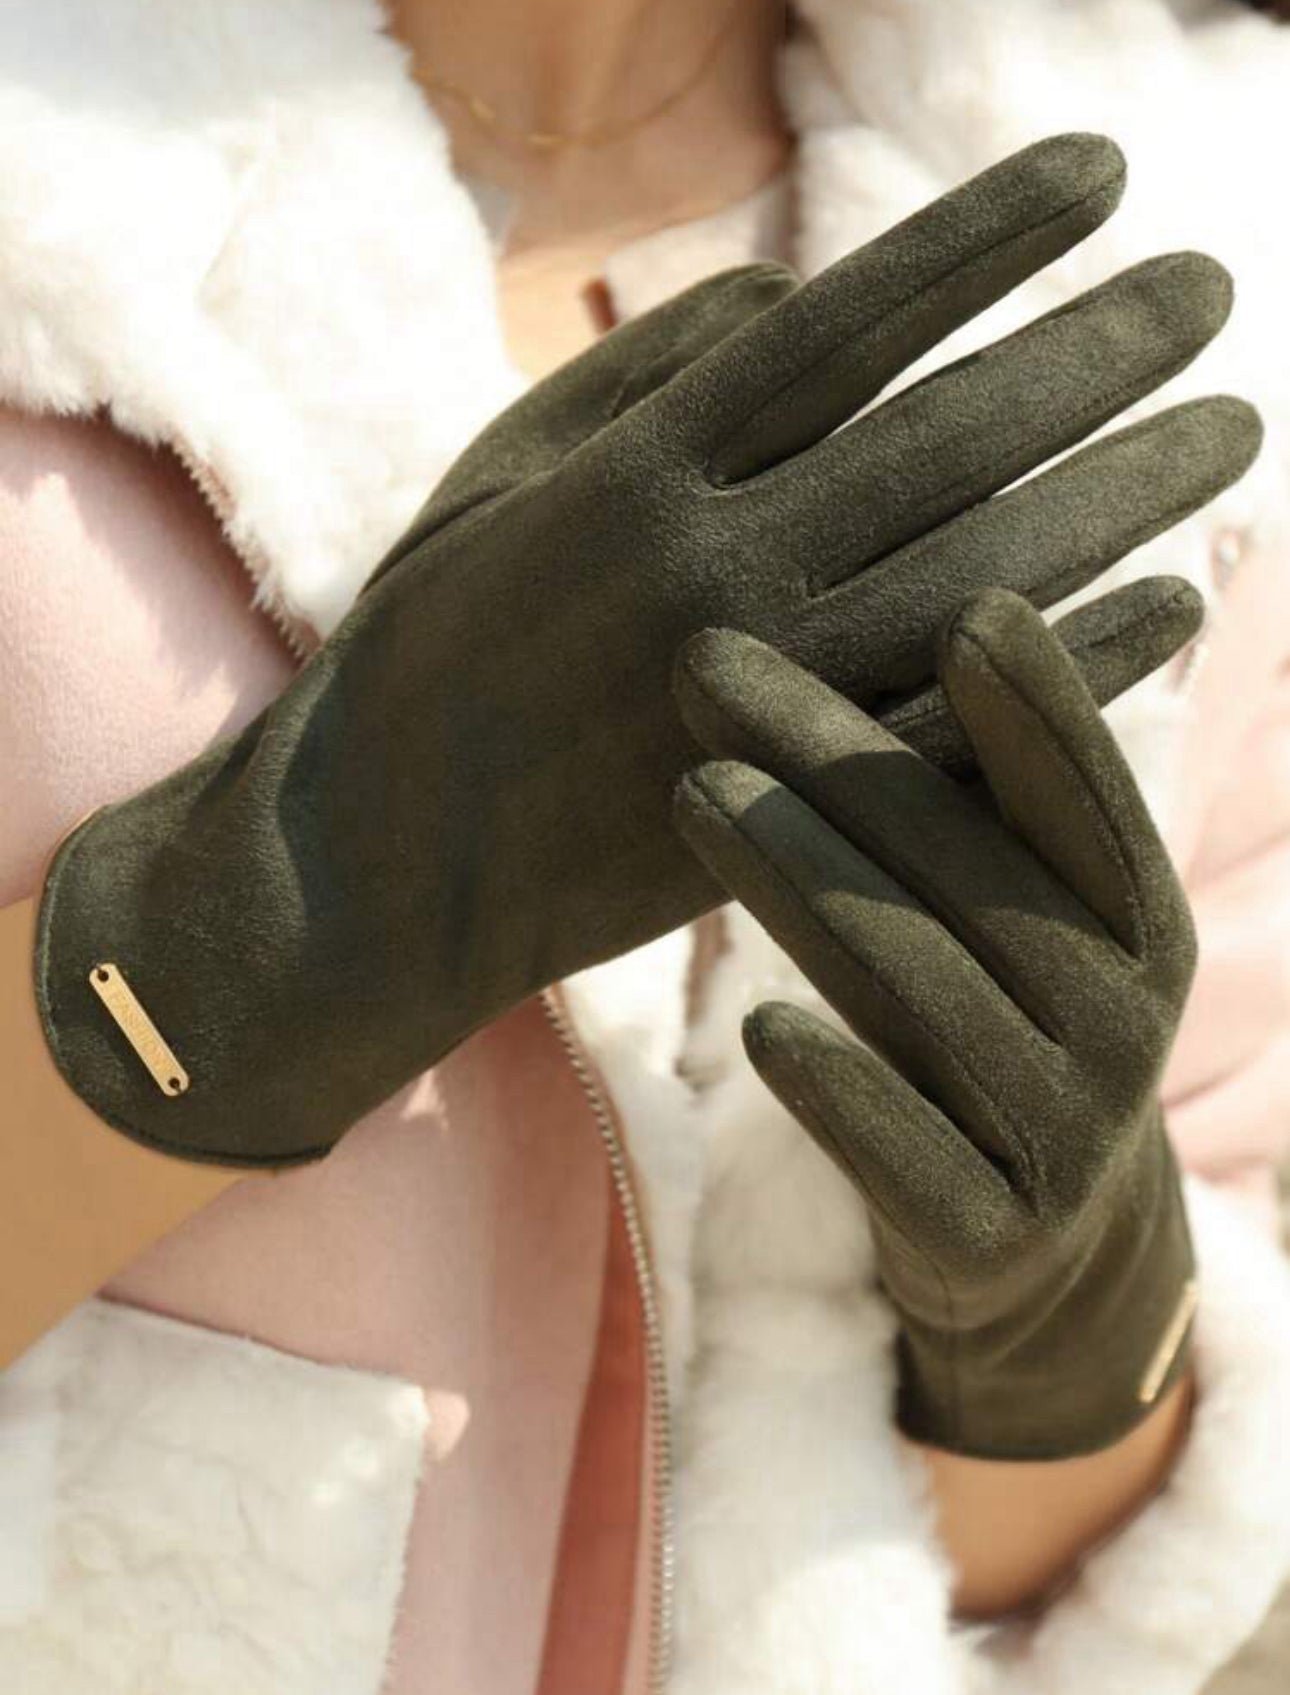 Women Casual Gloves